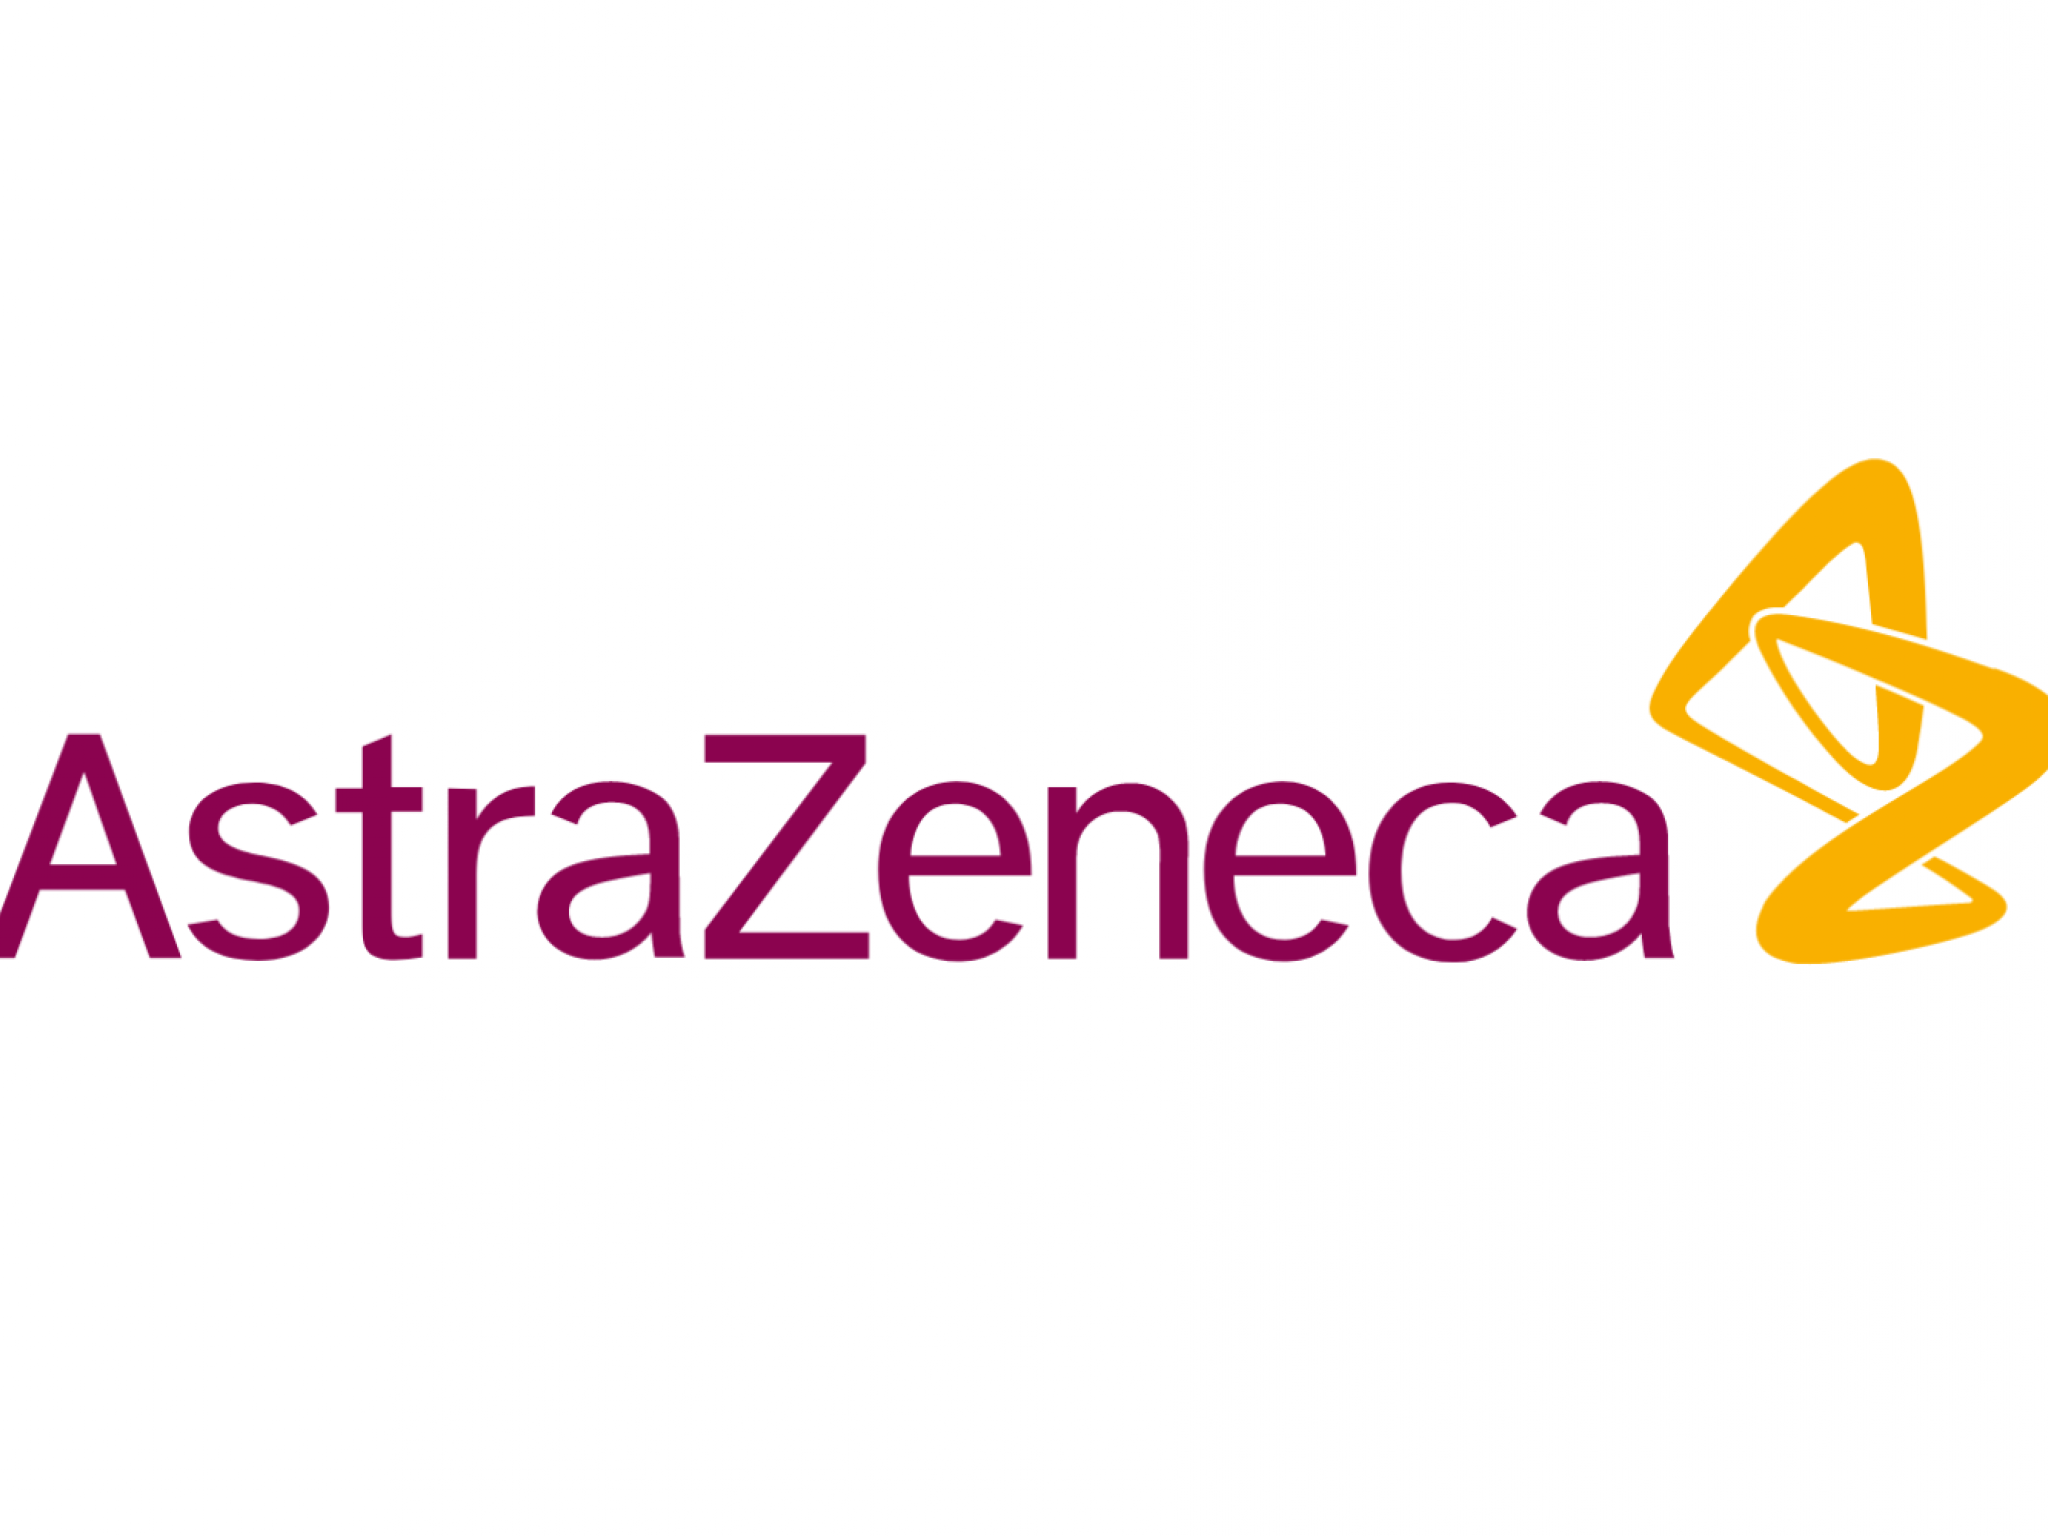  astrazeneca-q2-earnings-beat-consensus-despite-zero-covid-19-vaccine-sales-stock-shoots-up 